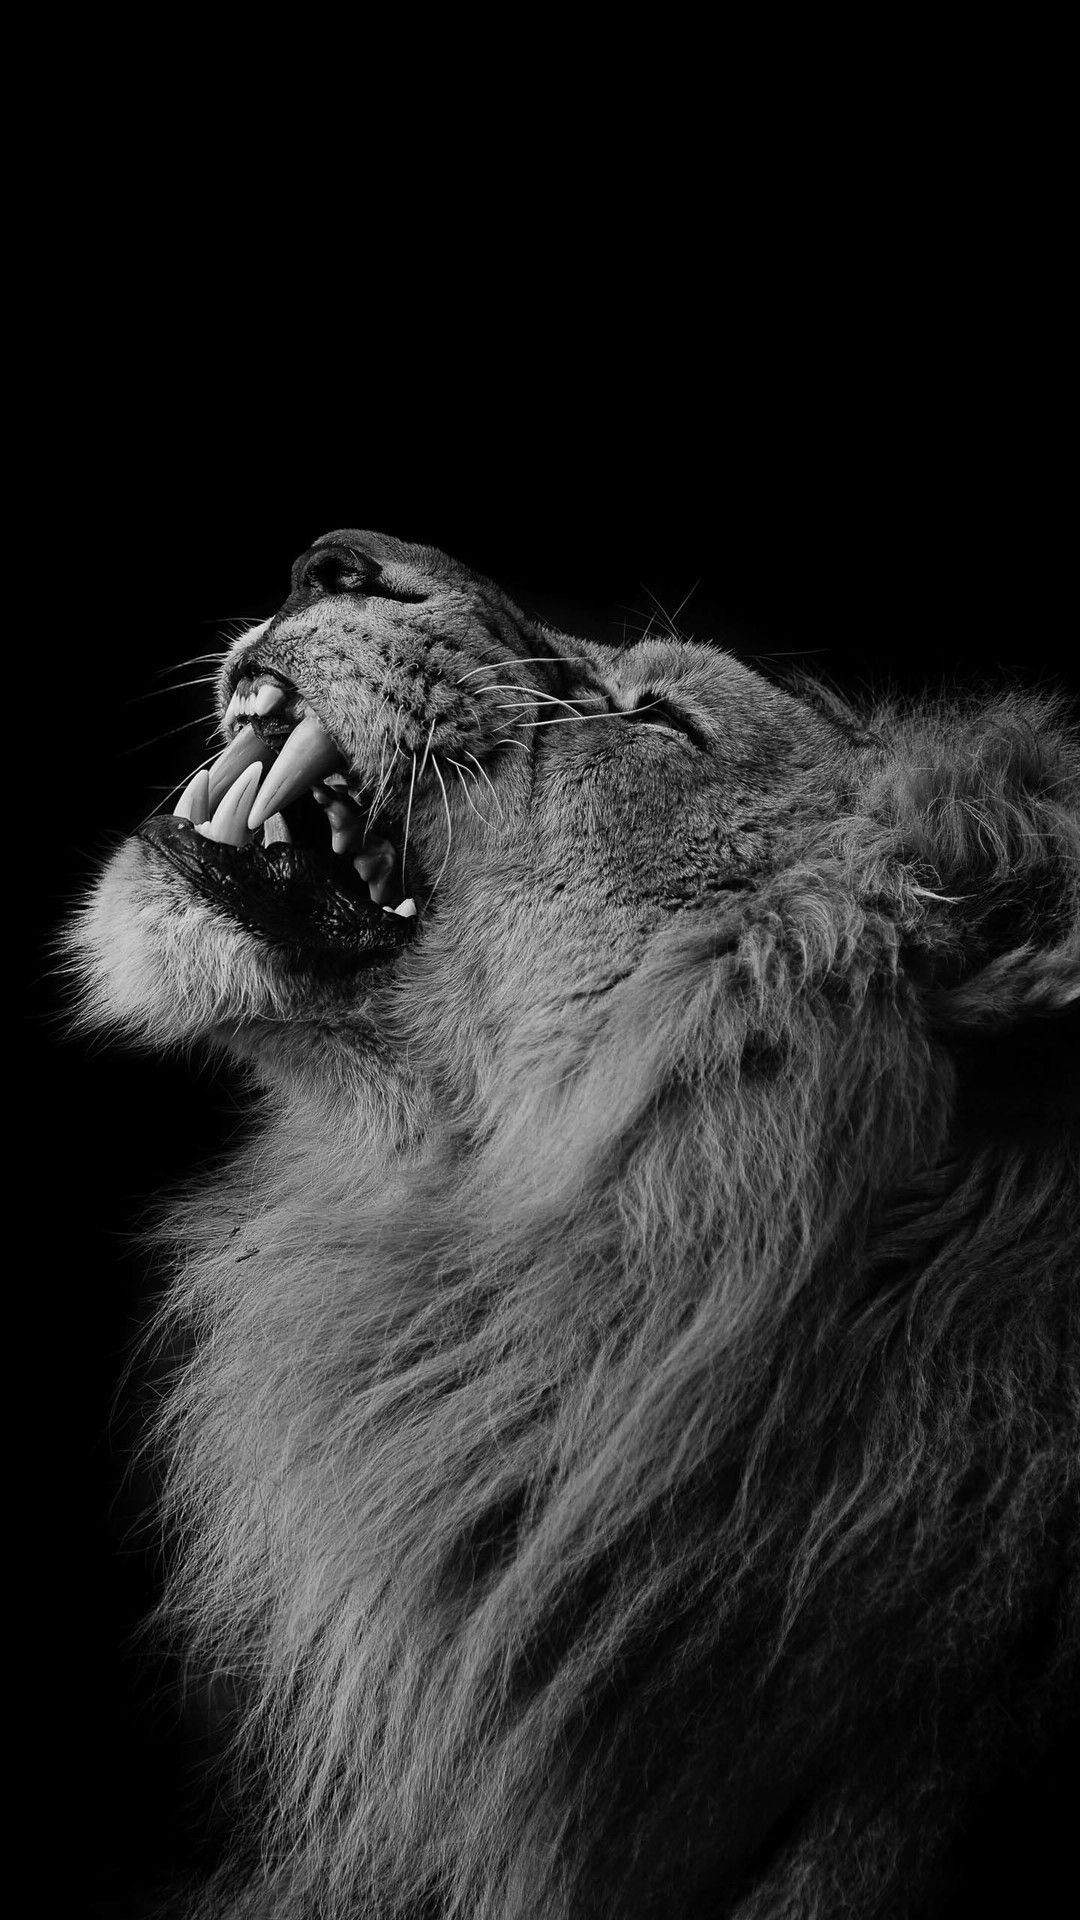  Lowe Schwarz Weiß Hintergrundbild 1080x1920. Top 10 IPhone 7 Wallpaper 1080x1920 Full Hd. Black And White Lion, Lion Photography, Lion Wallpaper